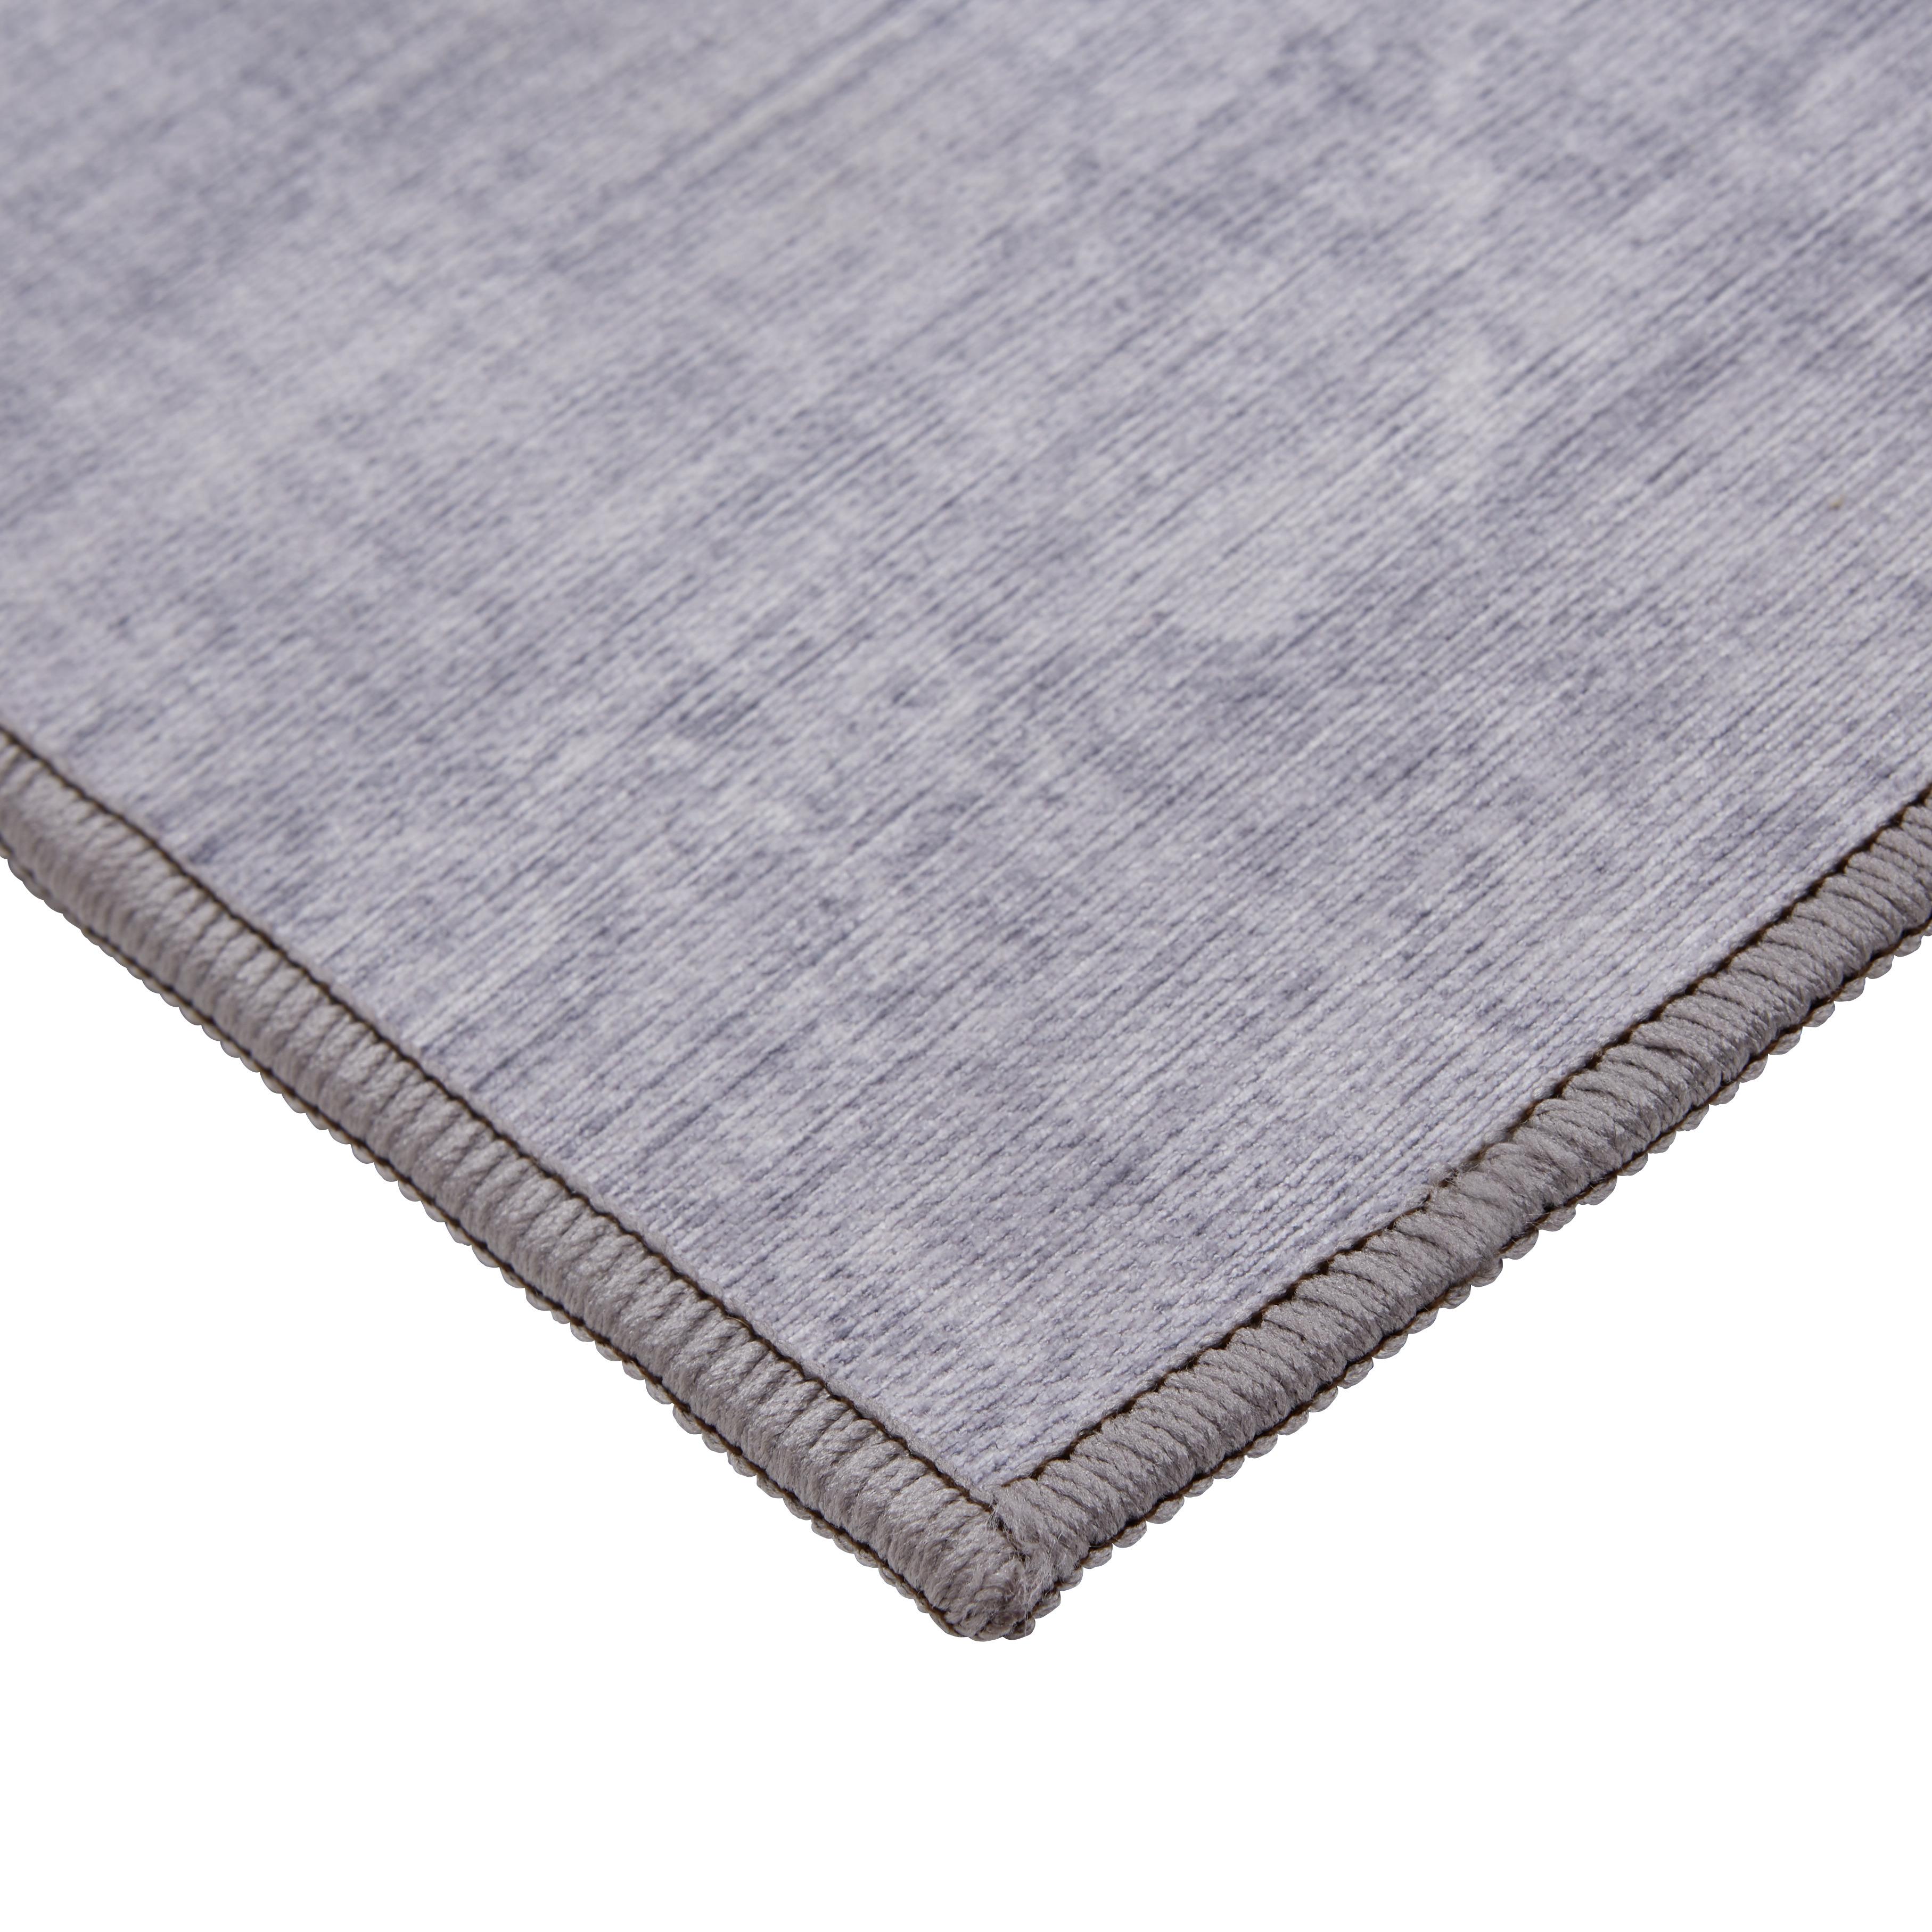 Webteppich Kabul 2 in Grau ca. 120x170cm - Grau, Textil (120/170cm) - Modern Living